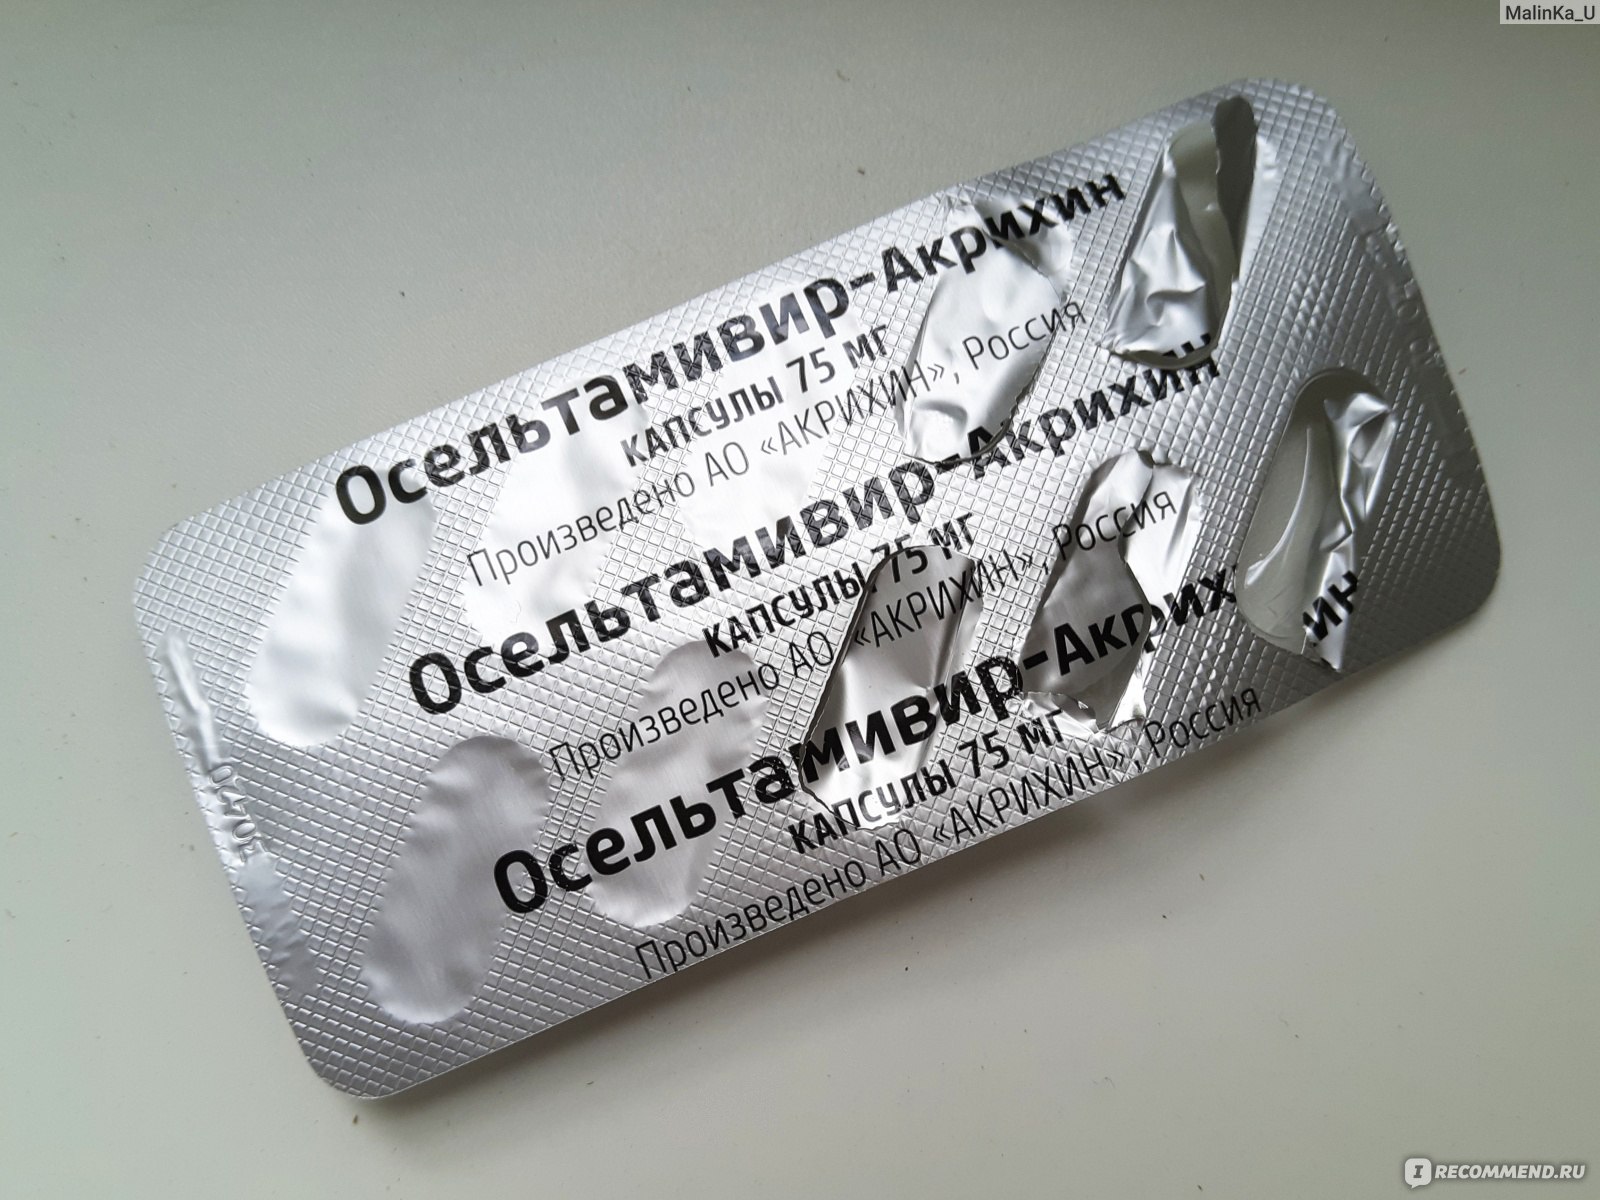 Противовирусное средство Акрихин Осельтамивир - «Осельтамивир .